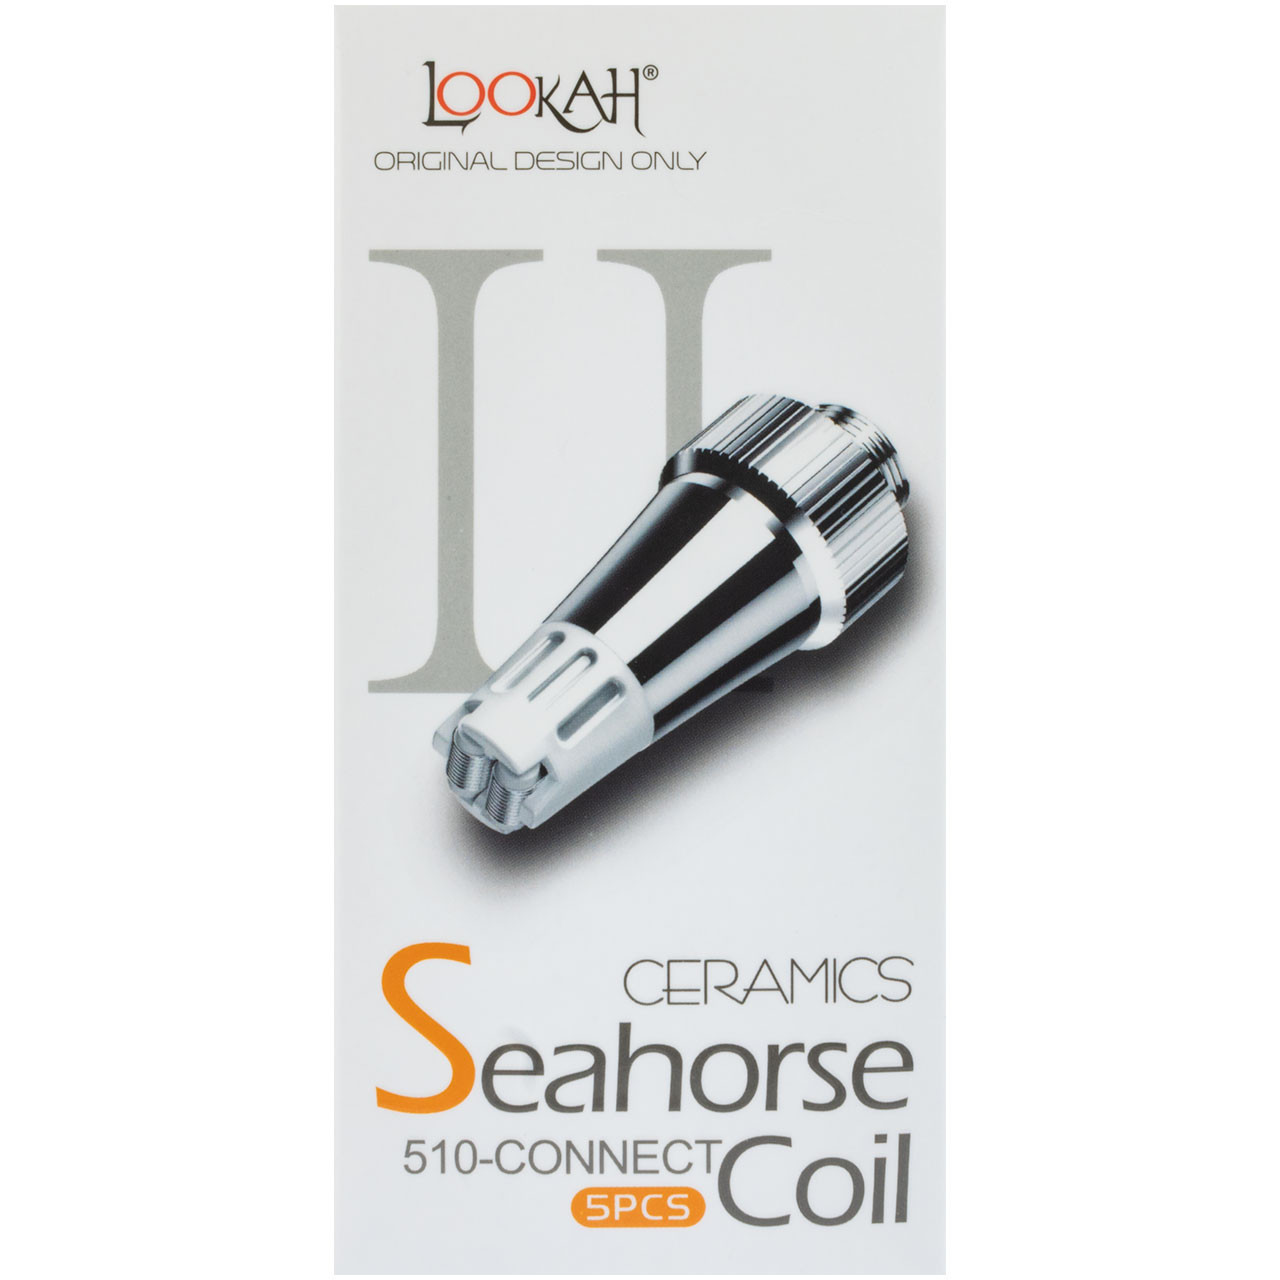 Lookah Seahorse Coil III: Ceramic Tube E-Nectar Collector Tips, 3-Pack